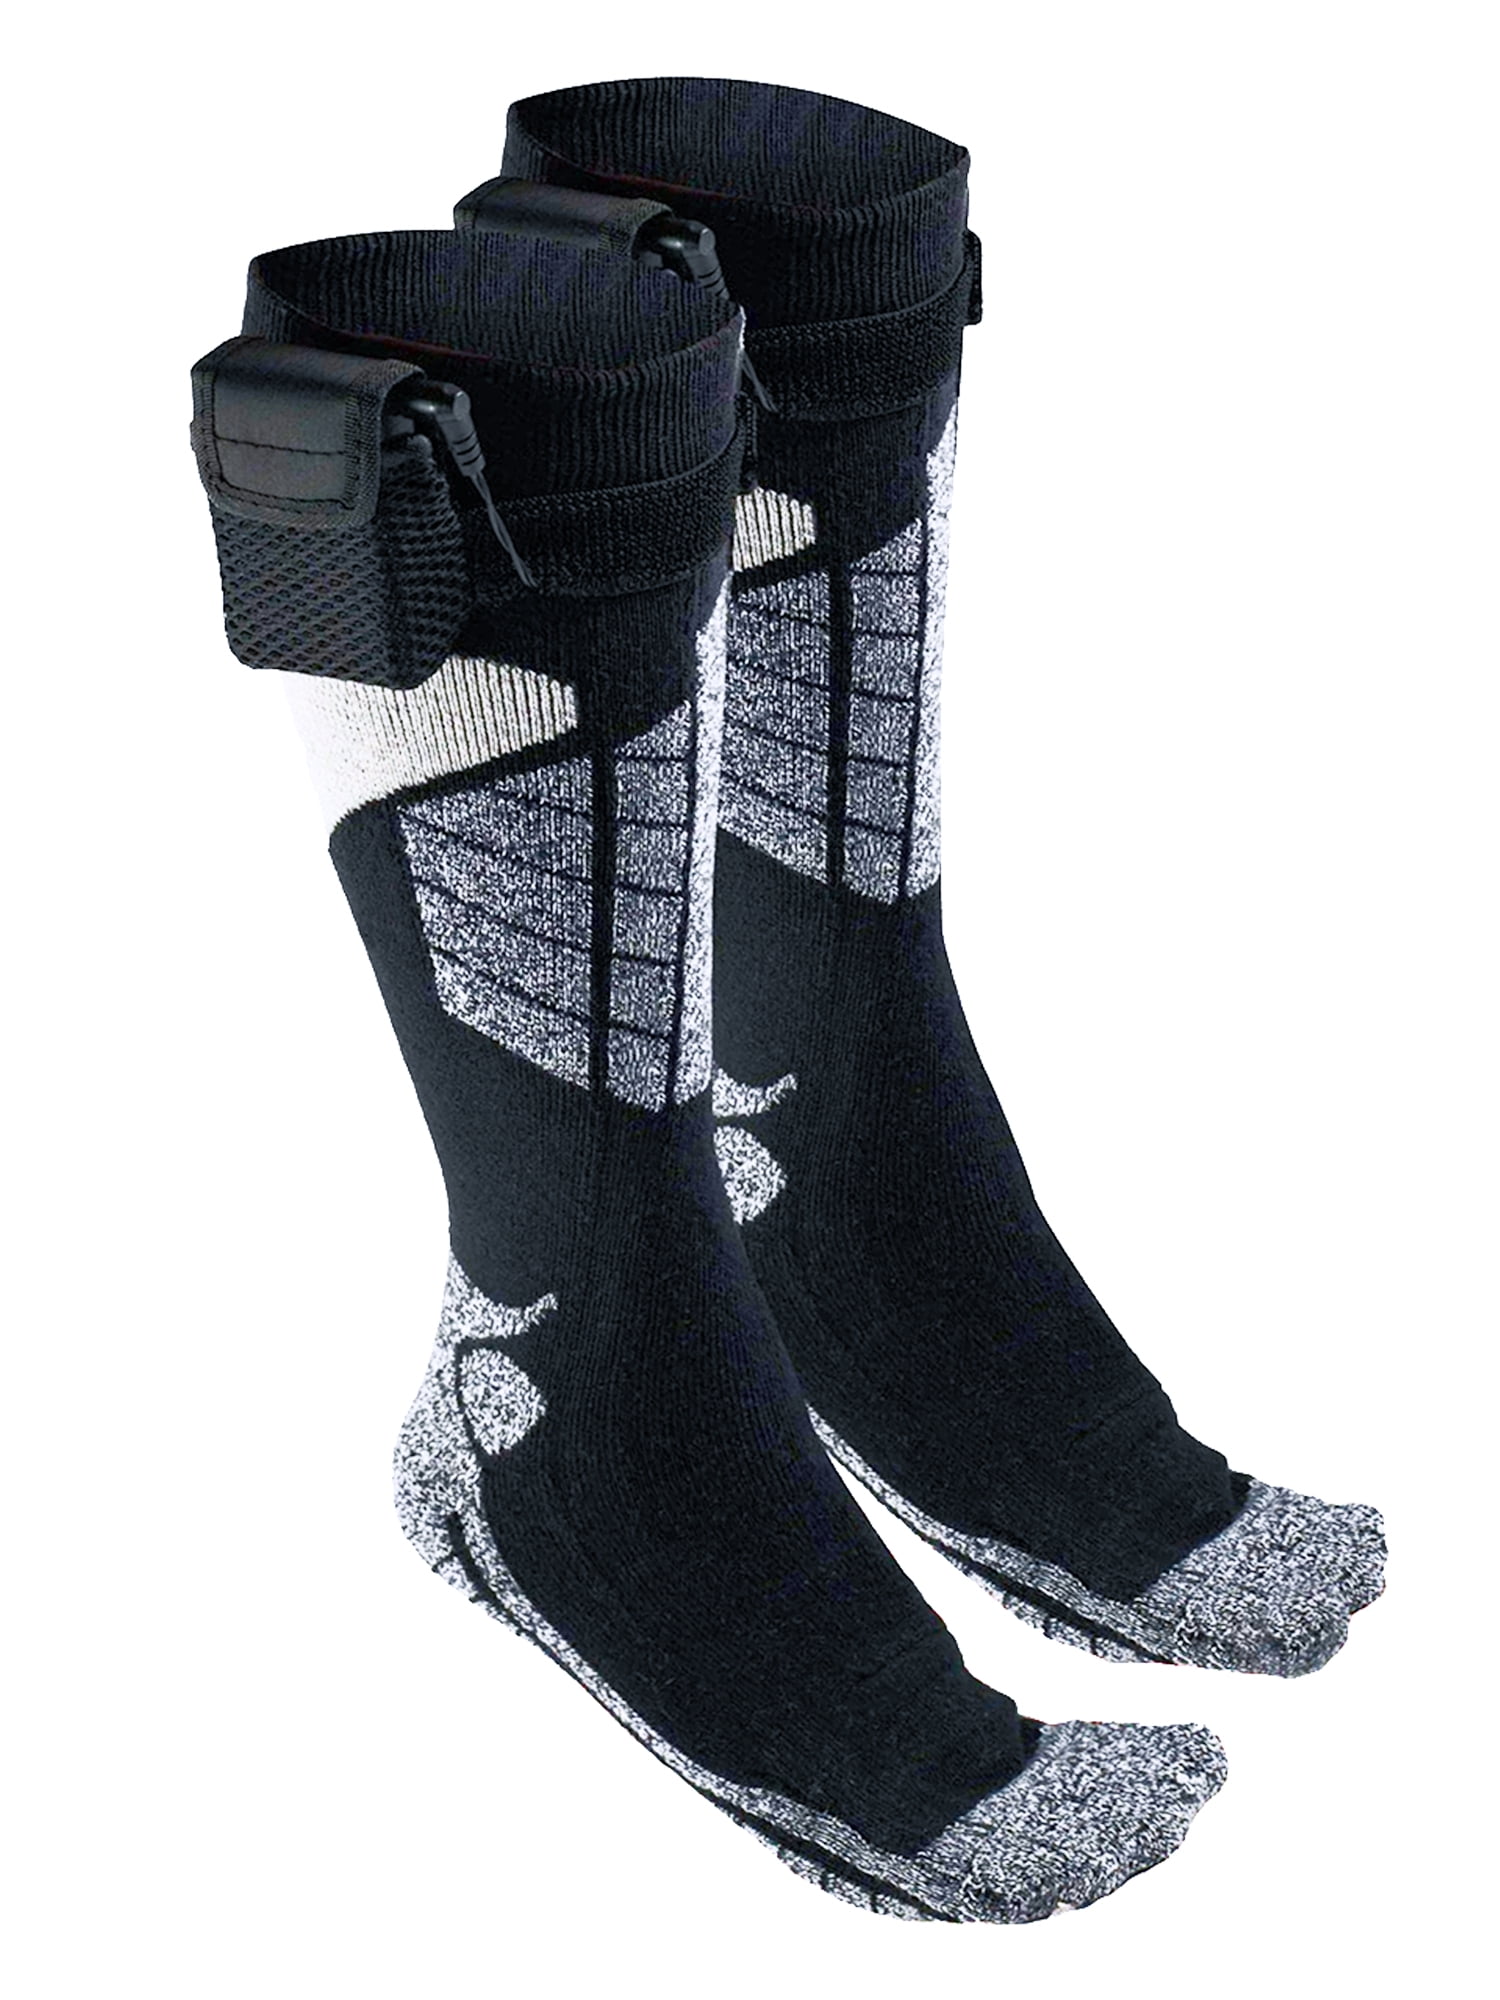 Warmawear Heated Socks Battery Powered Electric Winter Heat Mens Ladies Thermal@ 